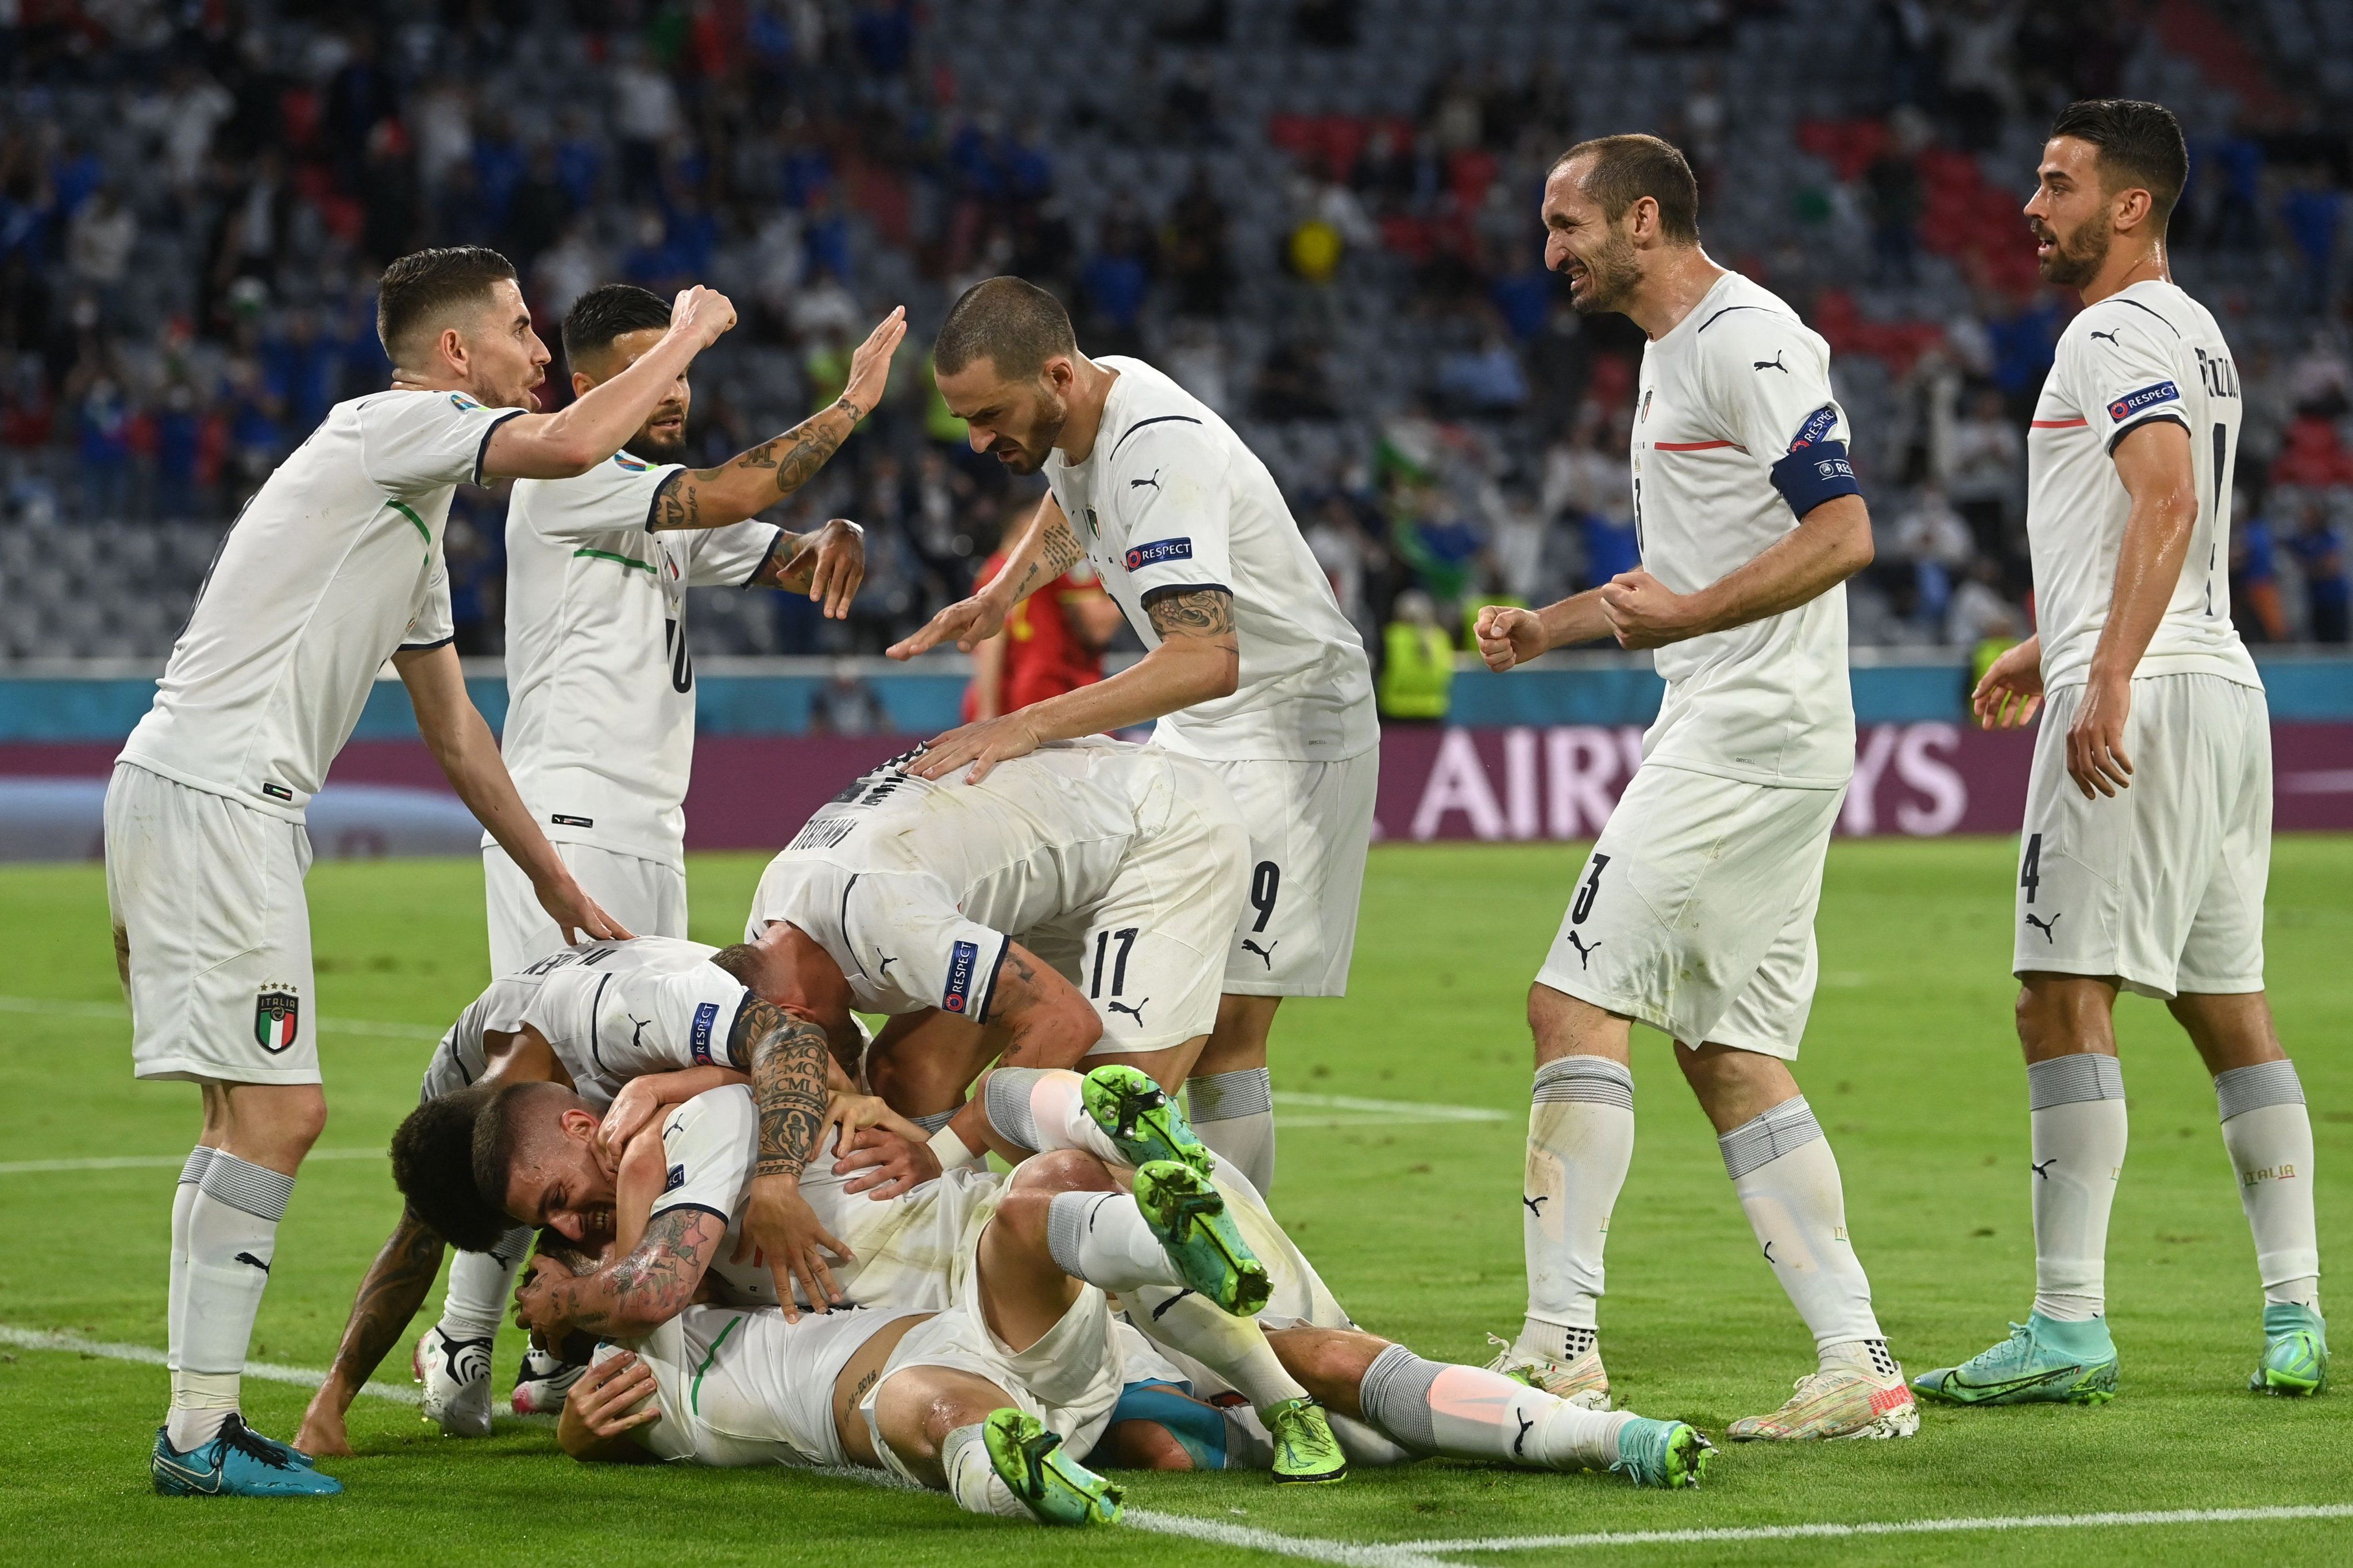 Италия – Испания прогноз 6 июля 2021: ставки и коэффициенты на матч ЧЕ-2020